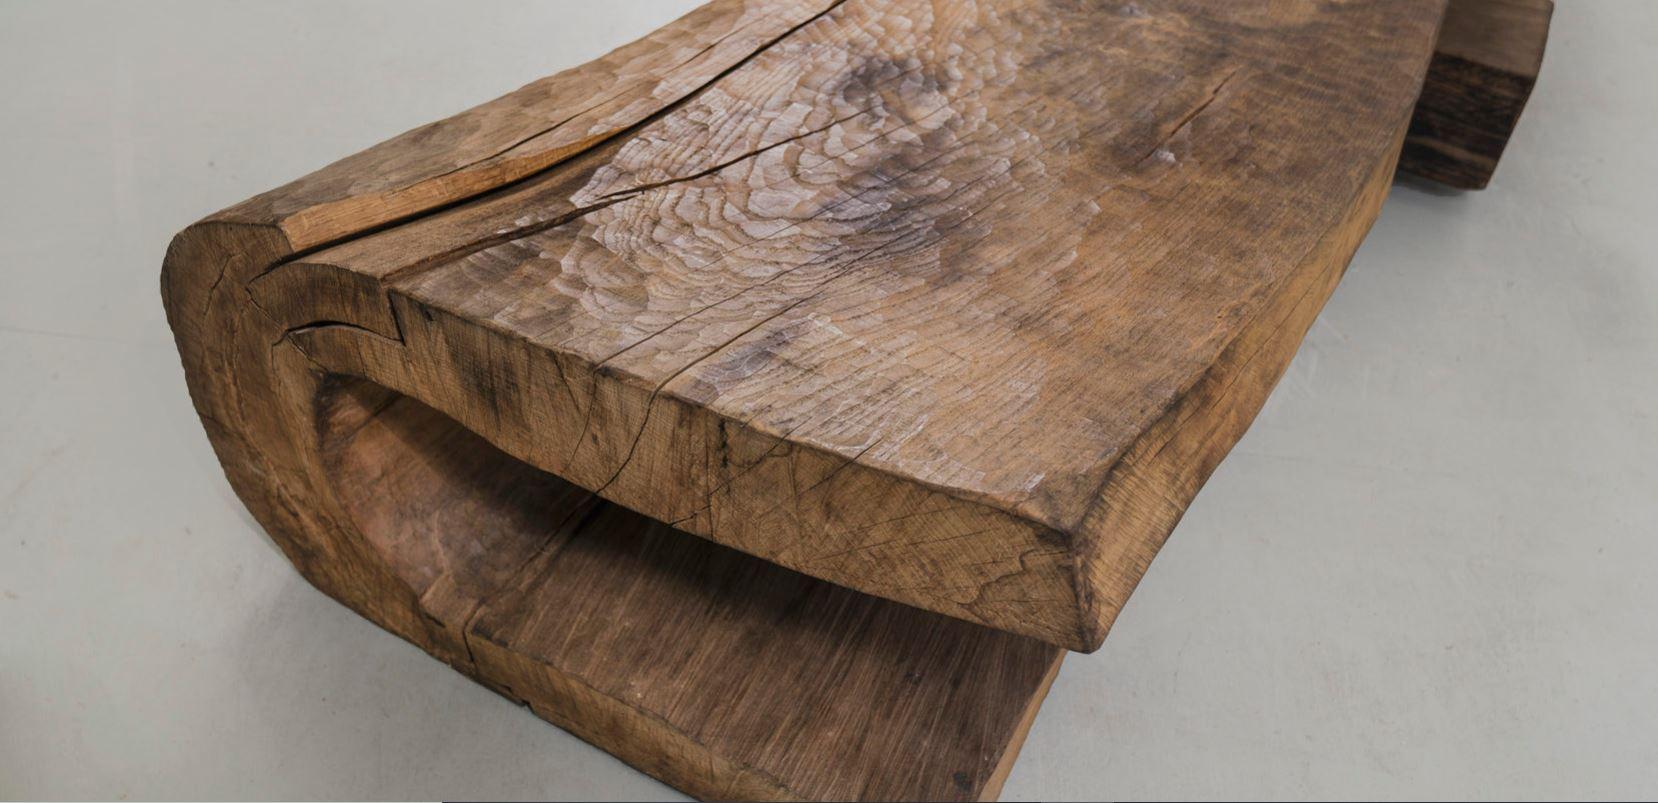 Original Sculpted Bench in Oakwood, Denis Milovanov 1